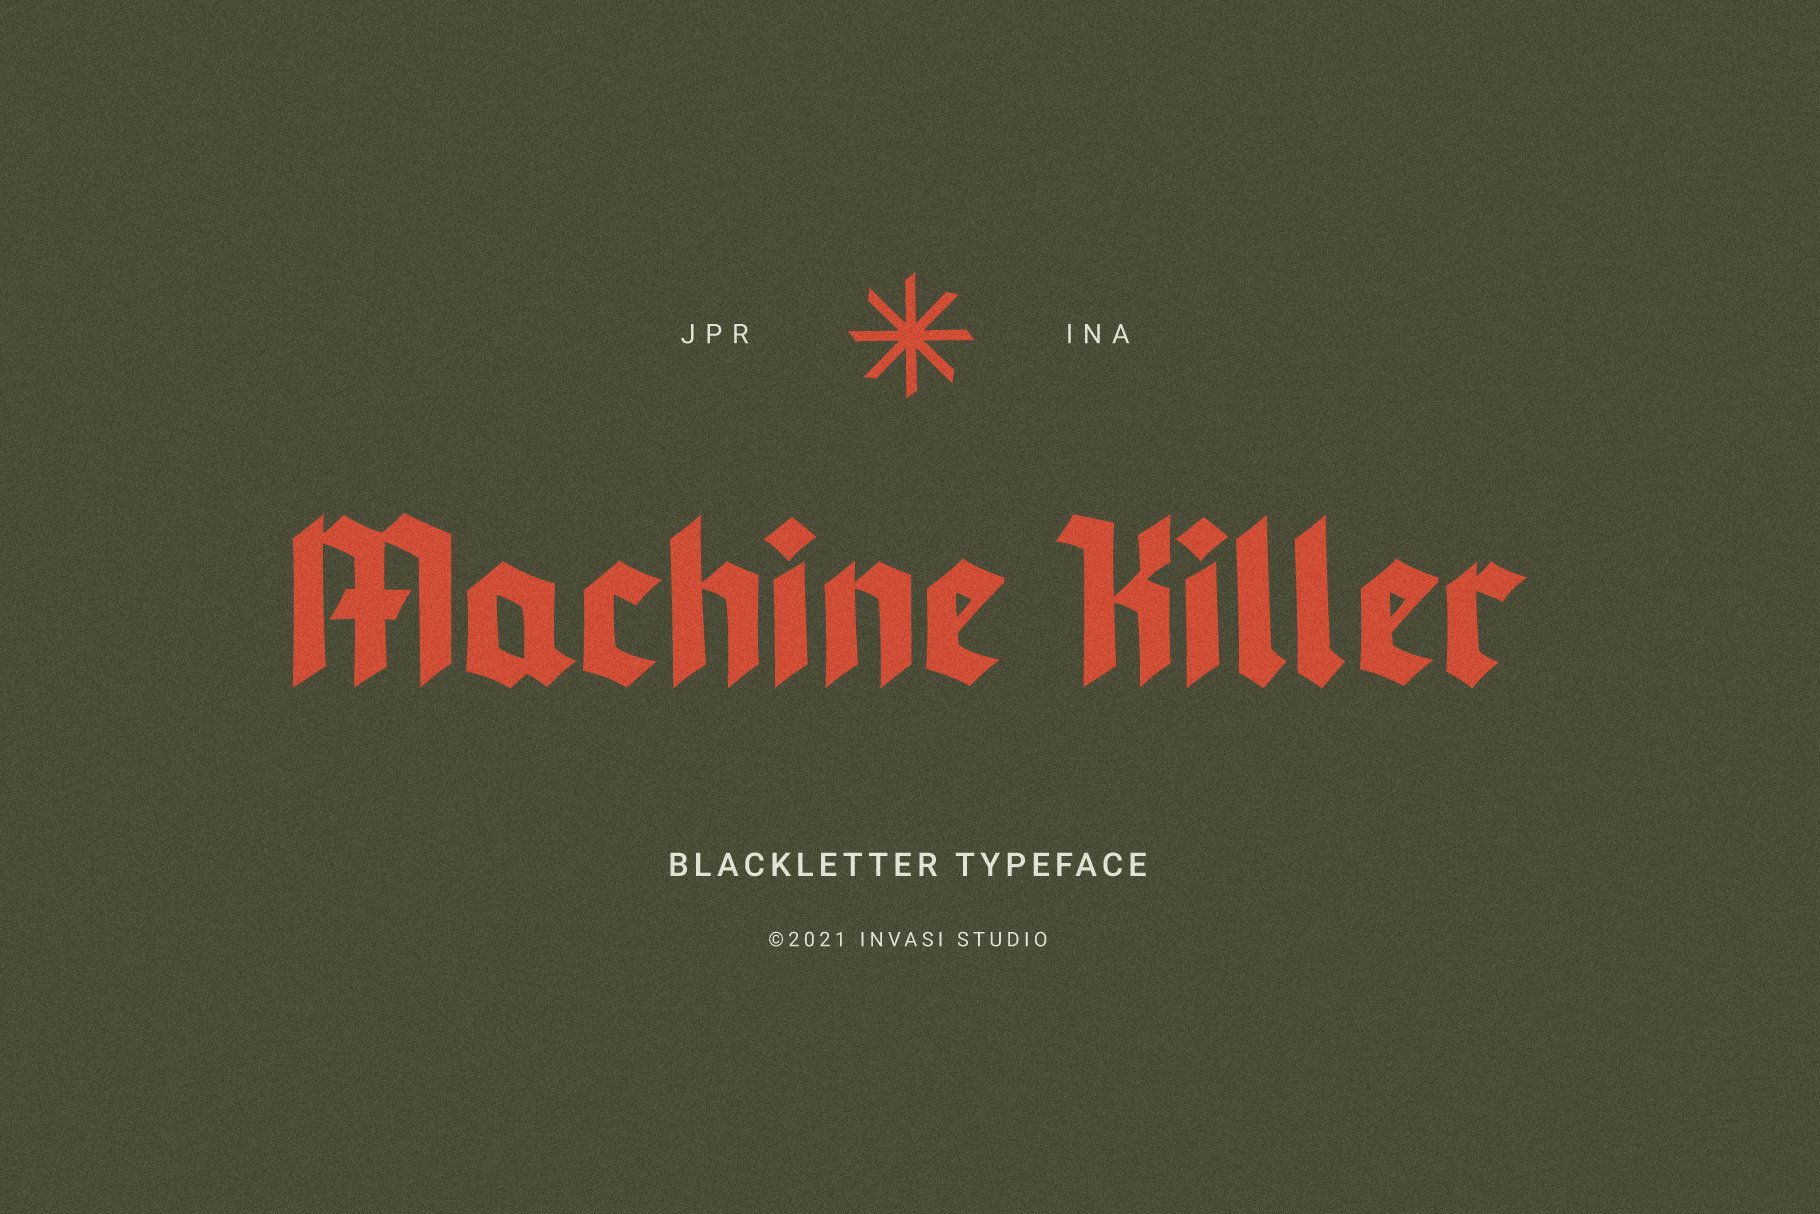 Machine Killer - Blackletter cover image.